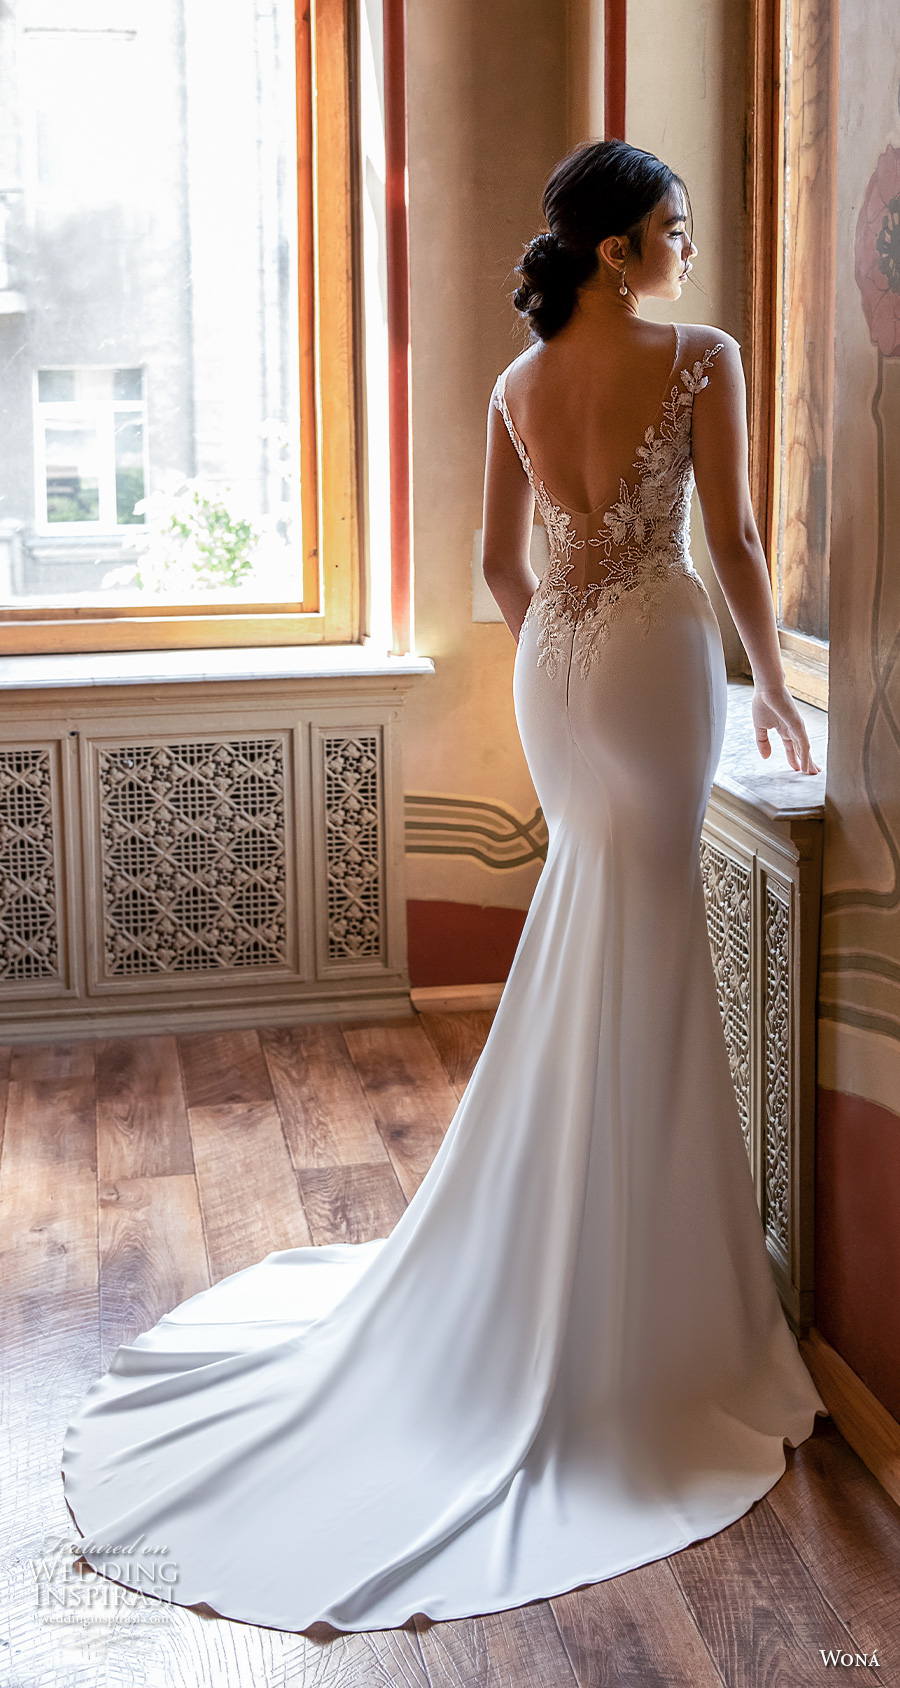 wona concept 2021 romance bridal cap sleeves v neck heavily embellished bodice elegant fit and flare wedding dress v back medium train (13) bv